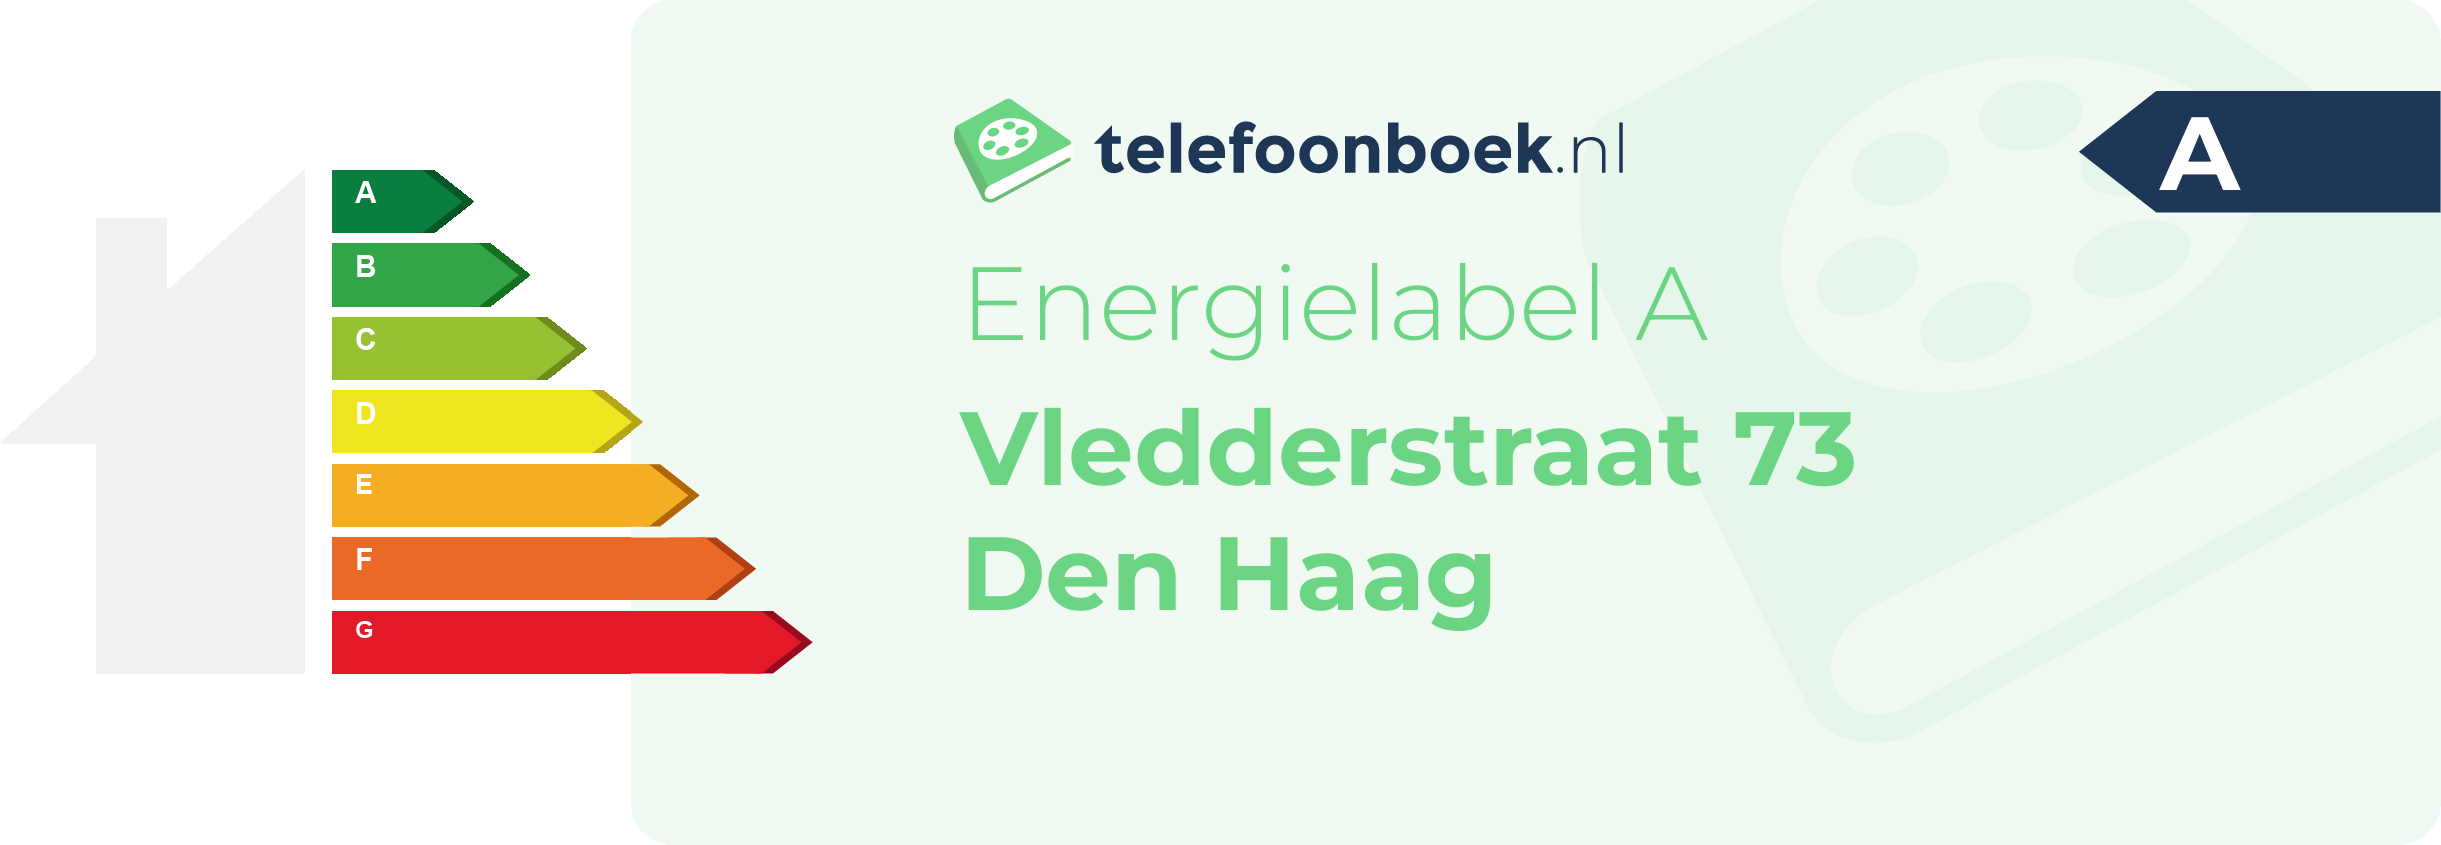 Energielabel Vledderstraat 73 Den Haag